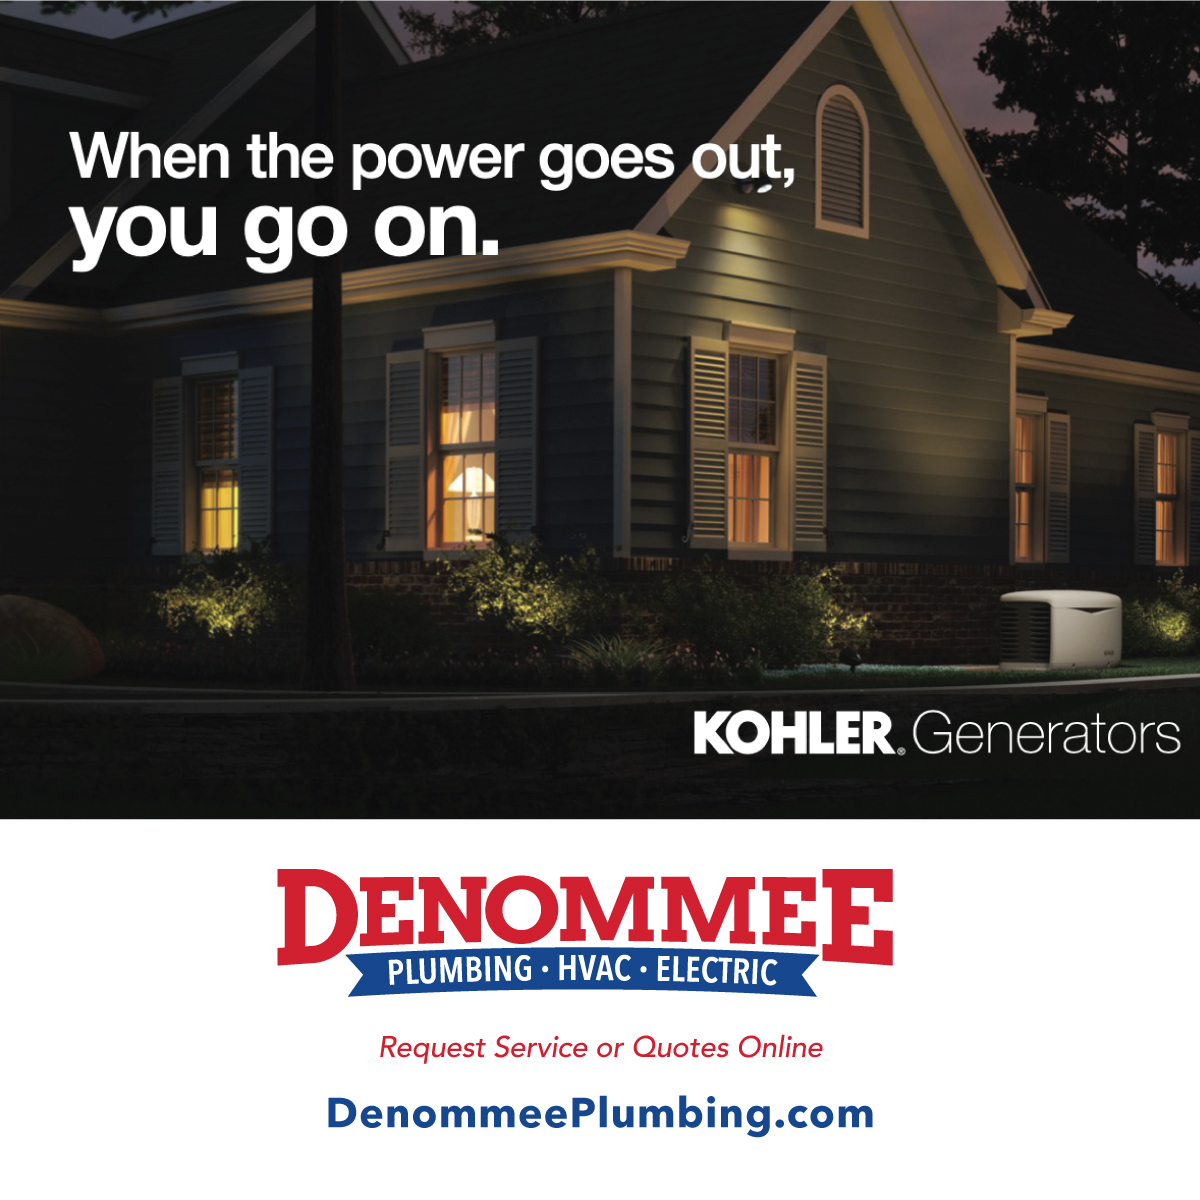 Kohler standby generator installation by Denommee Plumbing